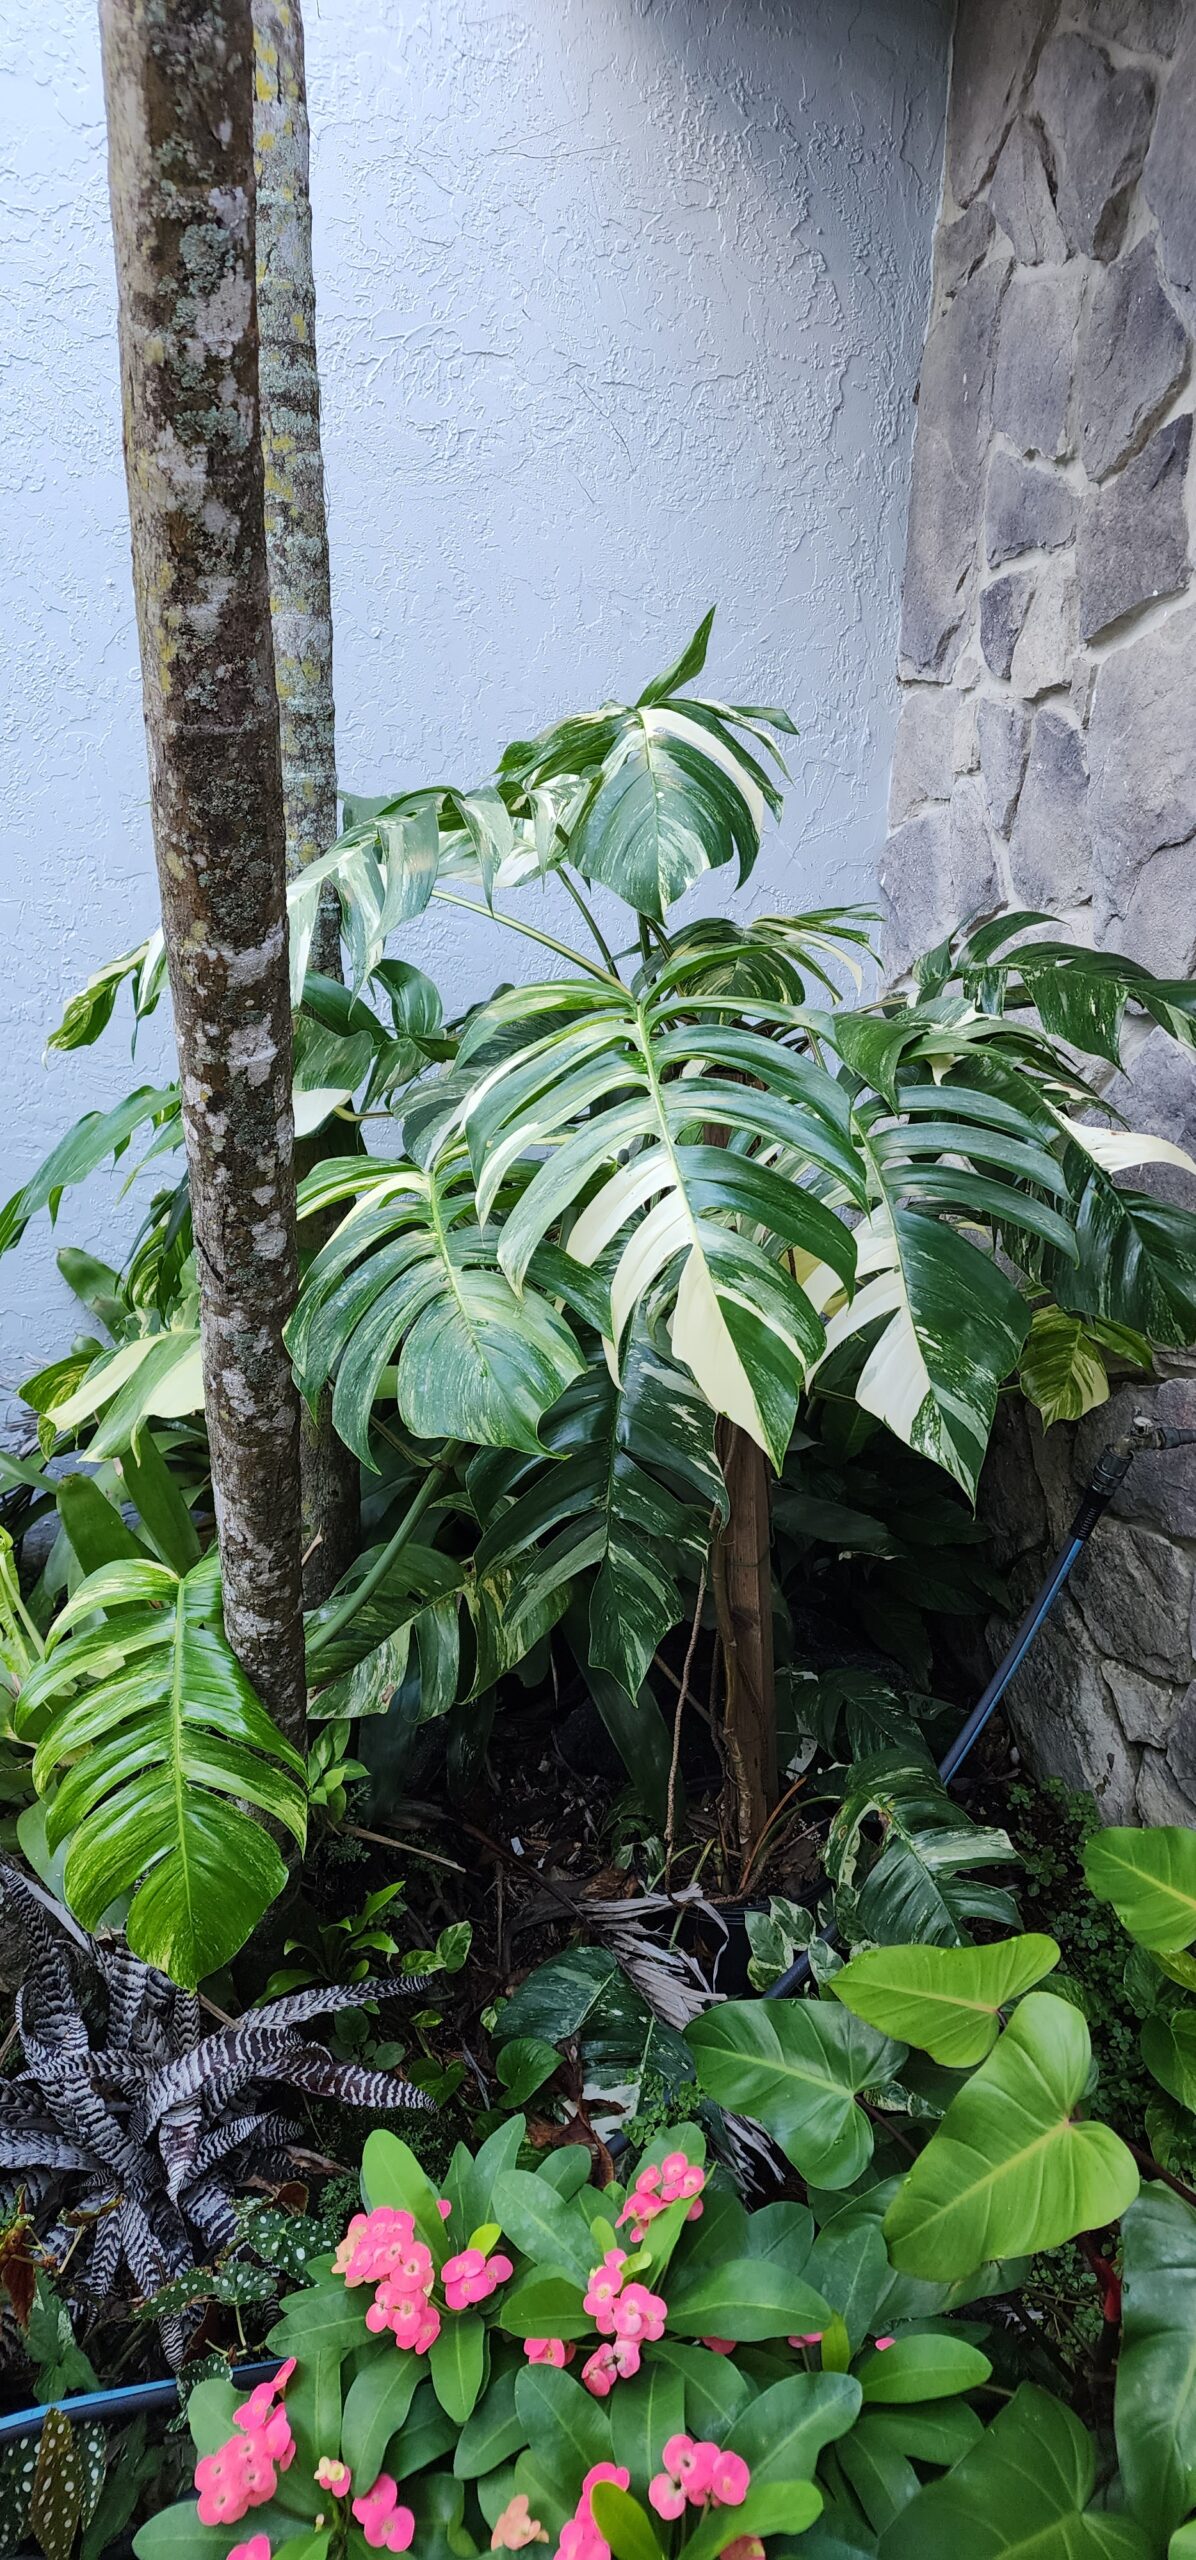 Epipremnum pinnatum albo variegata – Fairchild Tropical Botanic Garden